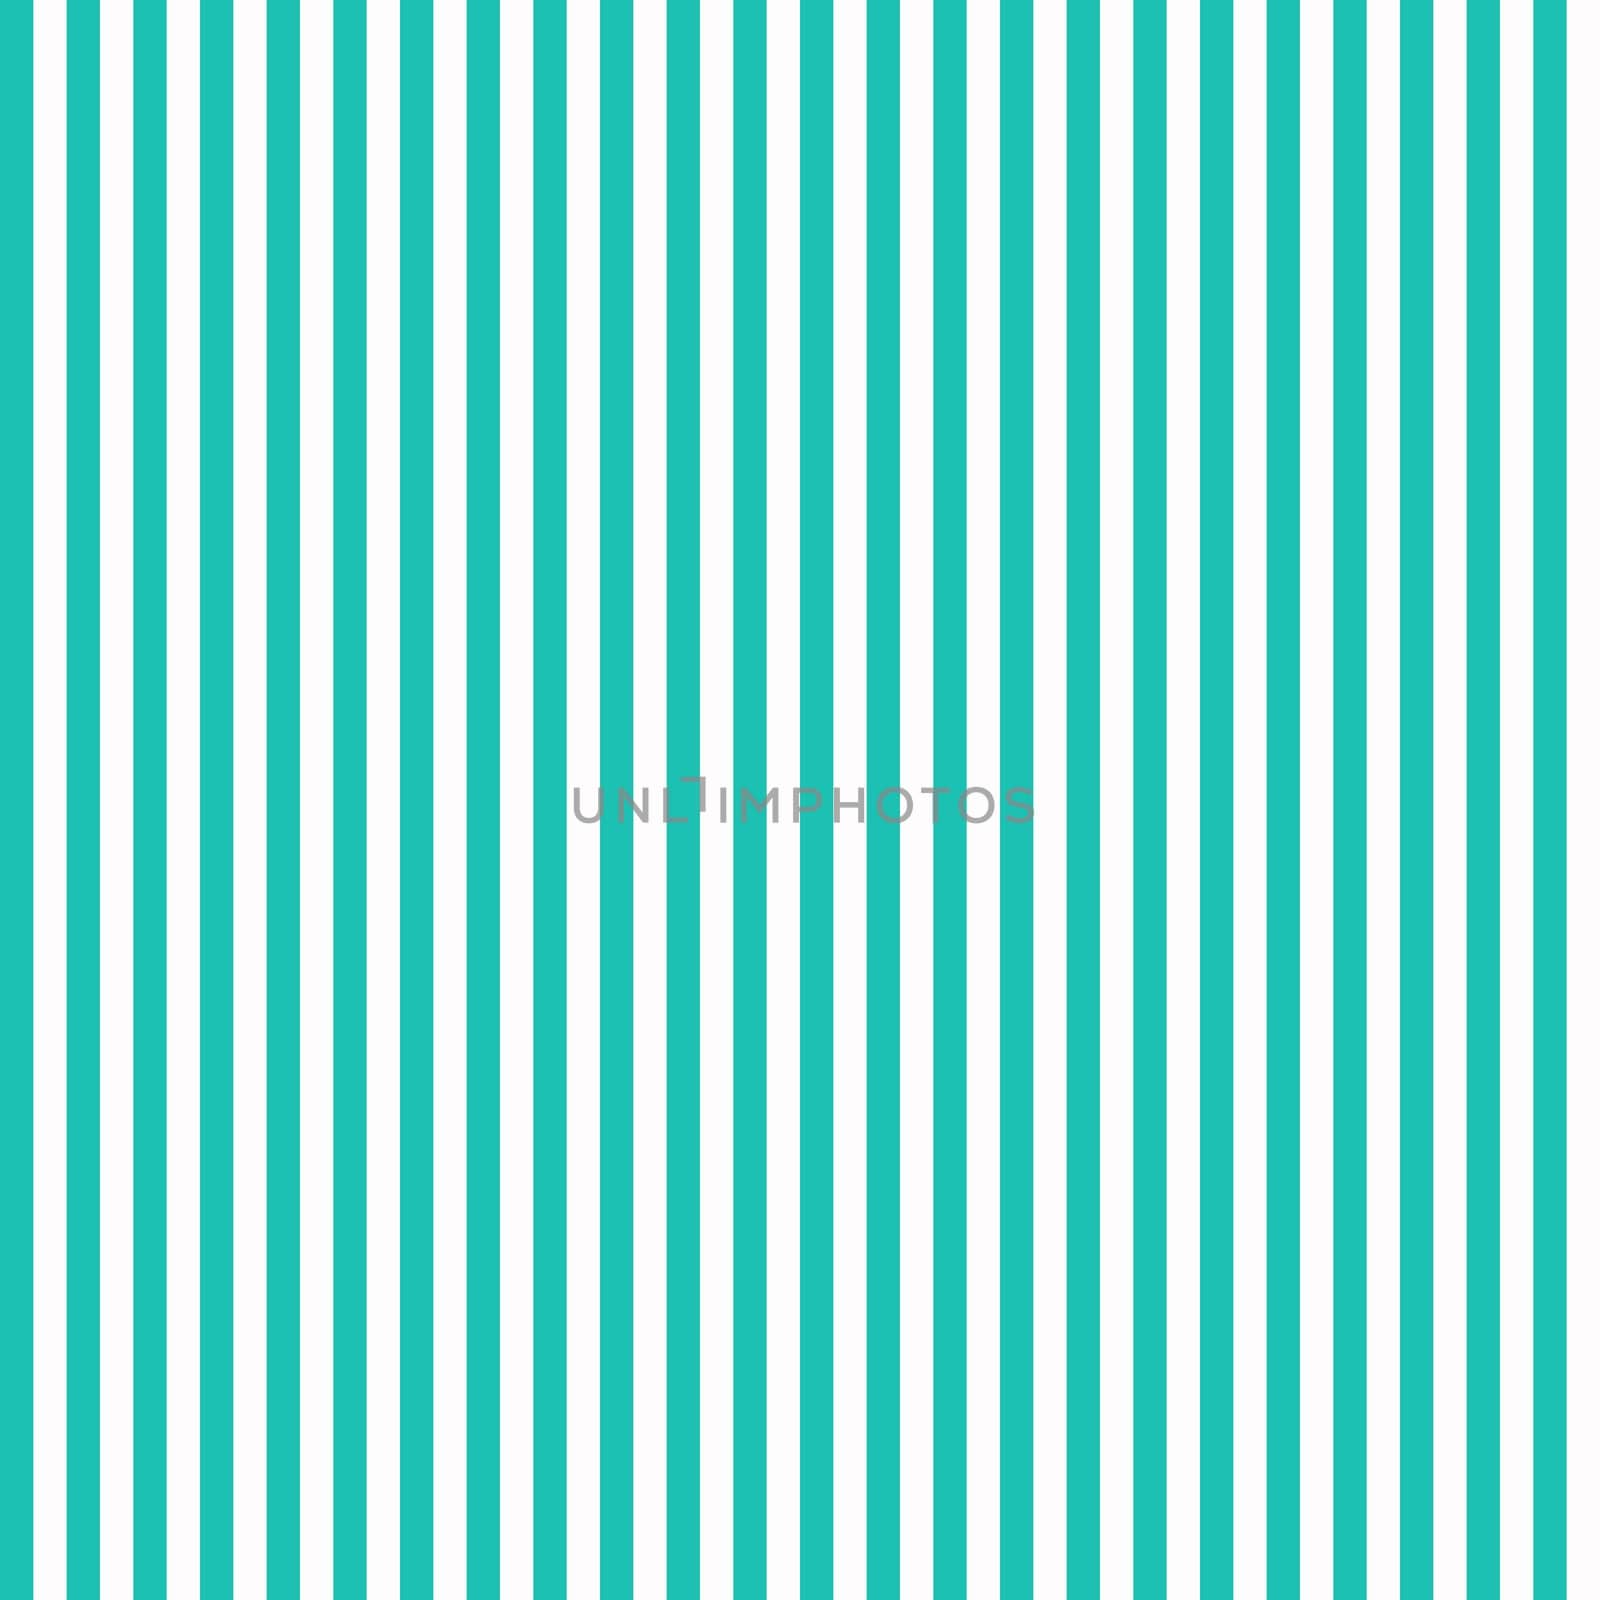 Vertical stripe pattern on a white background by Mastak80